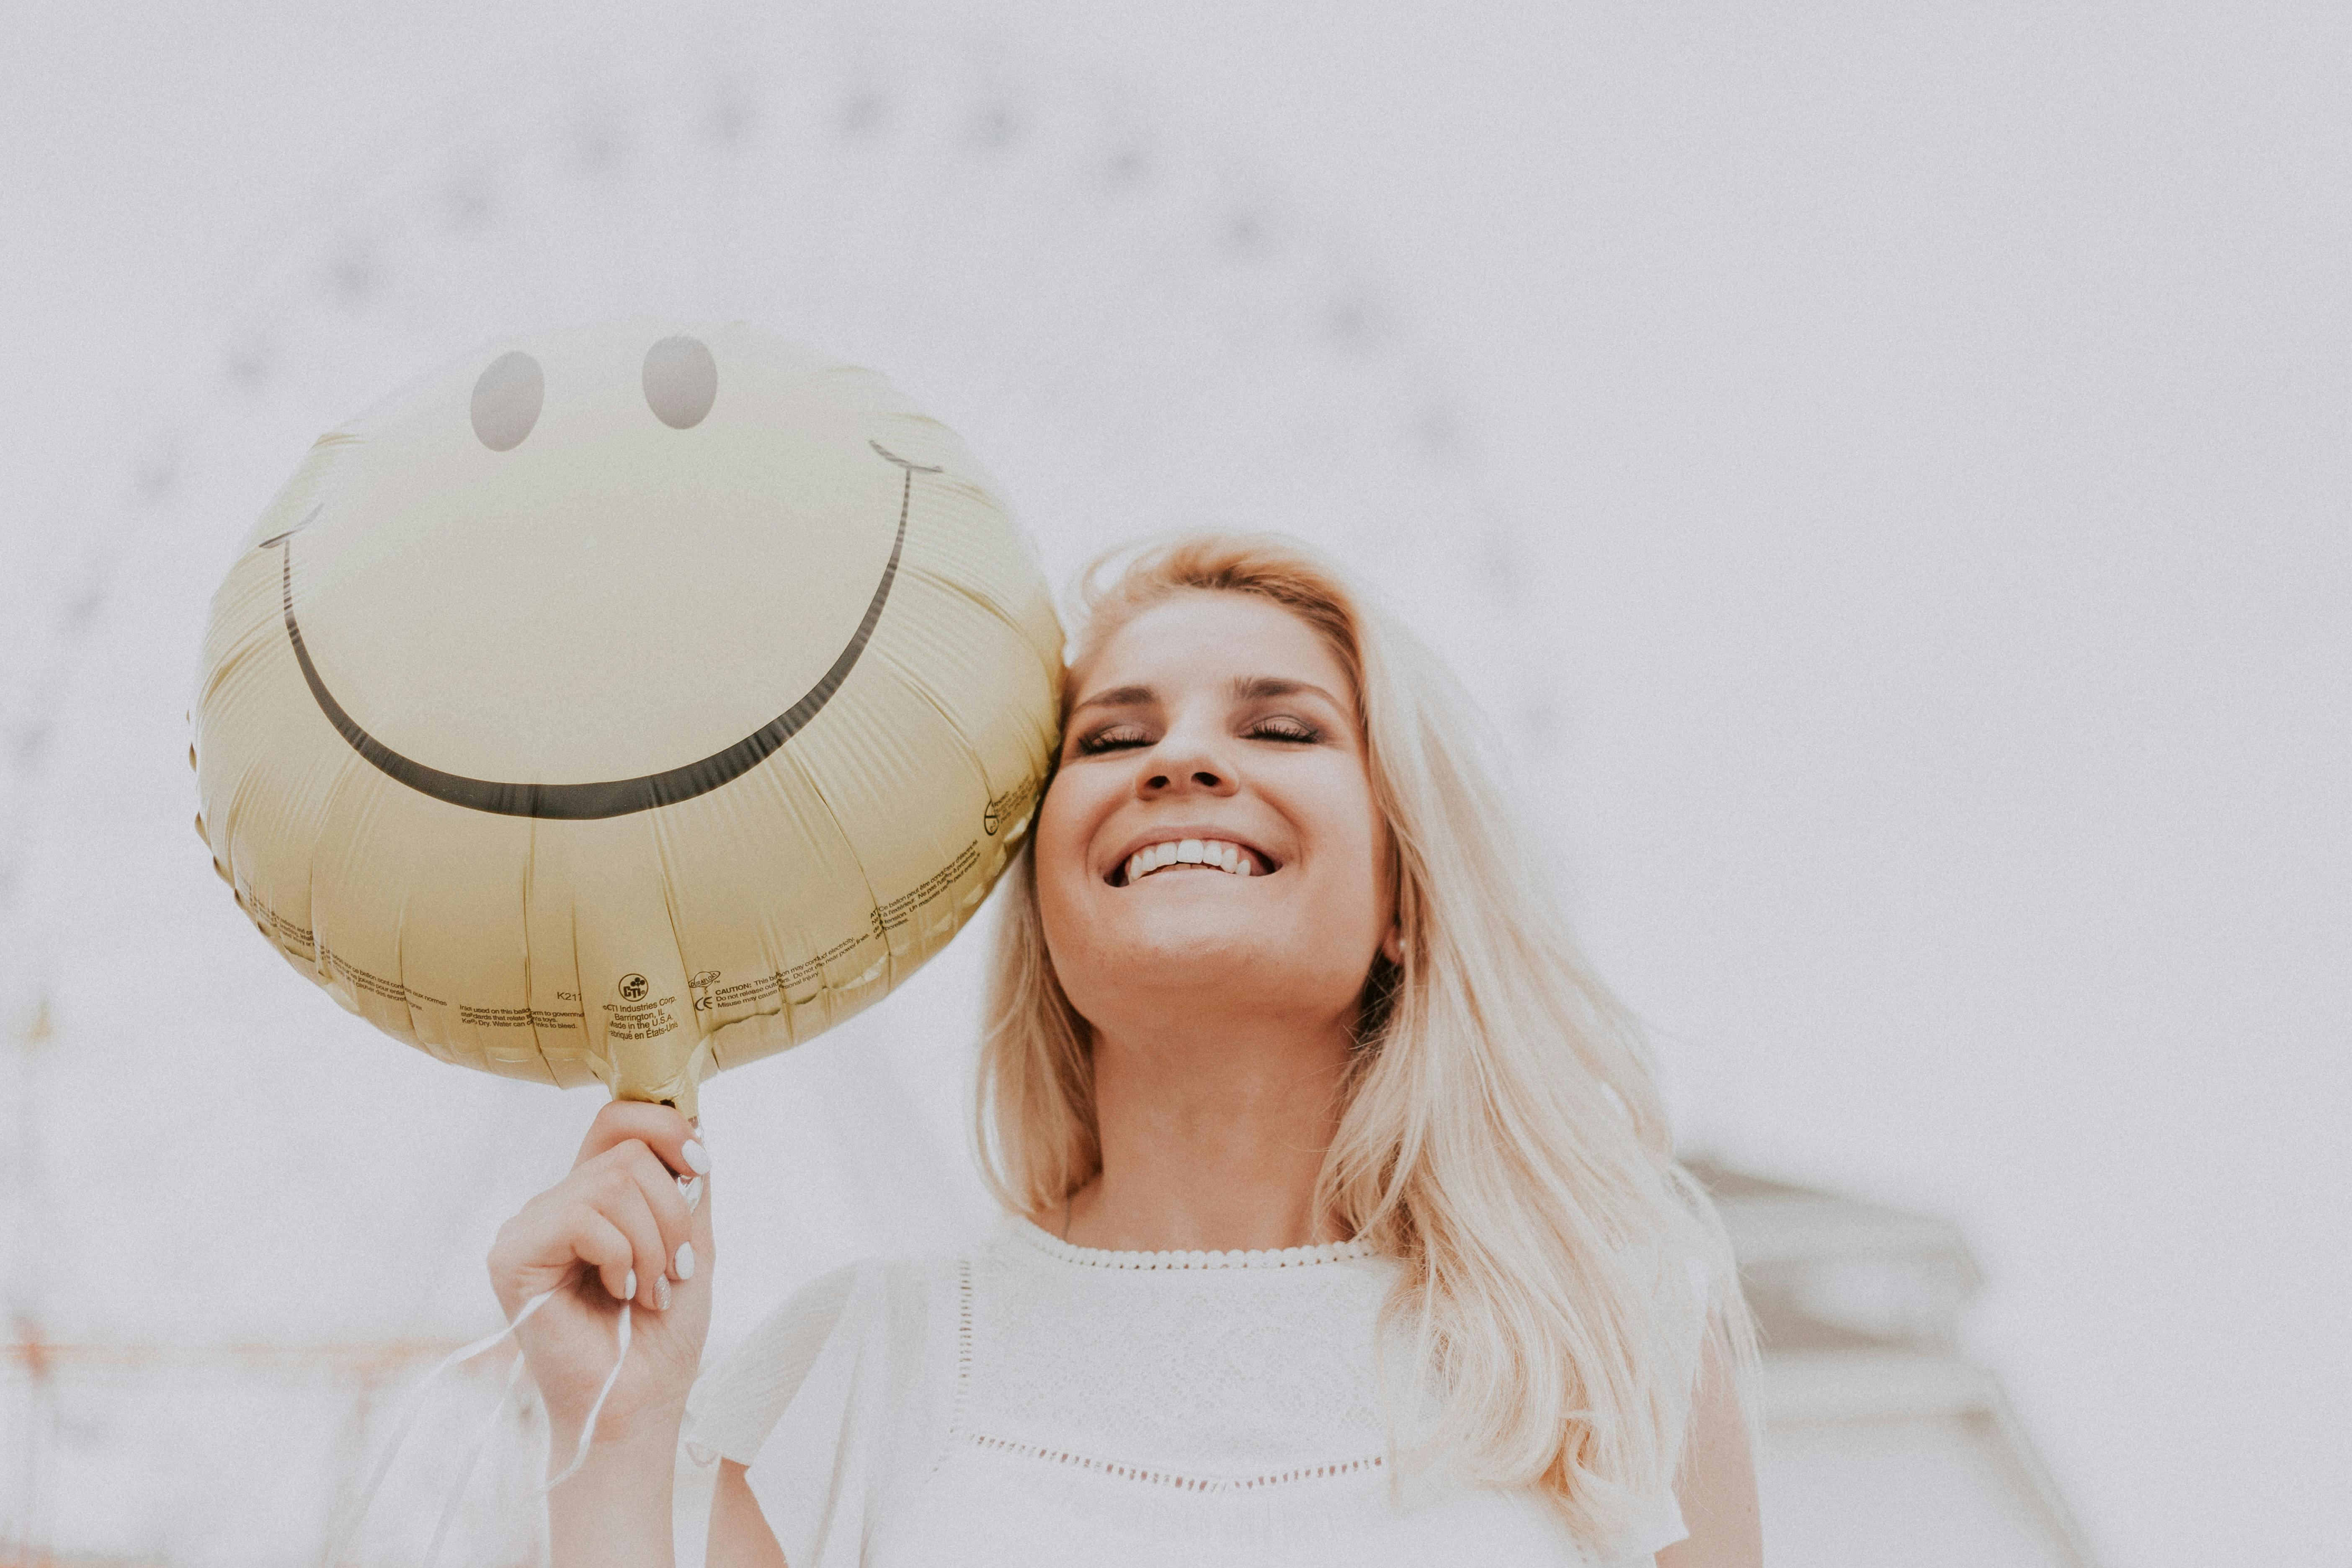 Femme tenant un ballon smiley | Source : Pexels